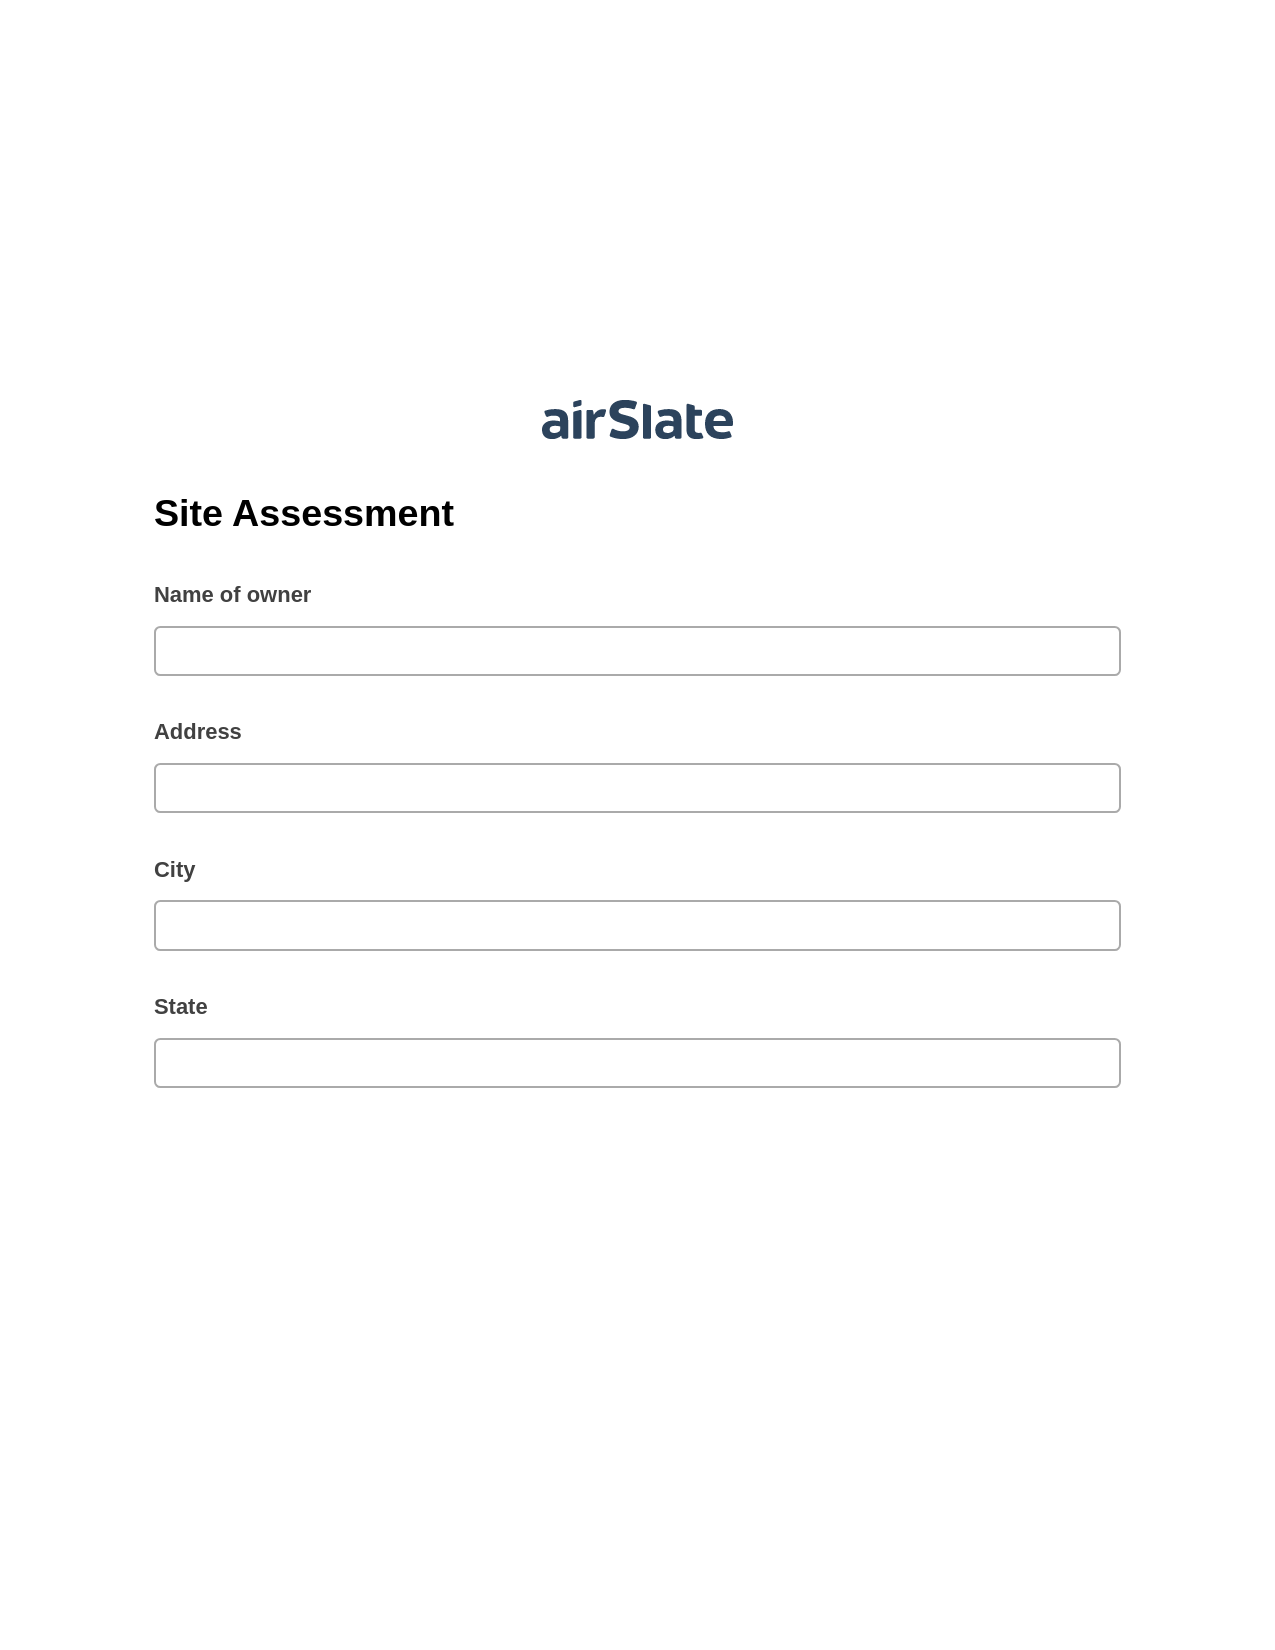 Site Assessment Pre-fill from CSV File Dropdown Options Bot, Create Slate every Google Sheet Update Bot, Slack Notification Postfinish Bot